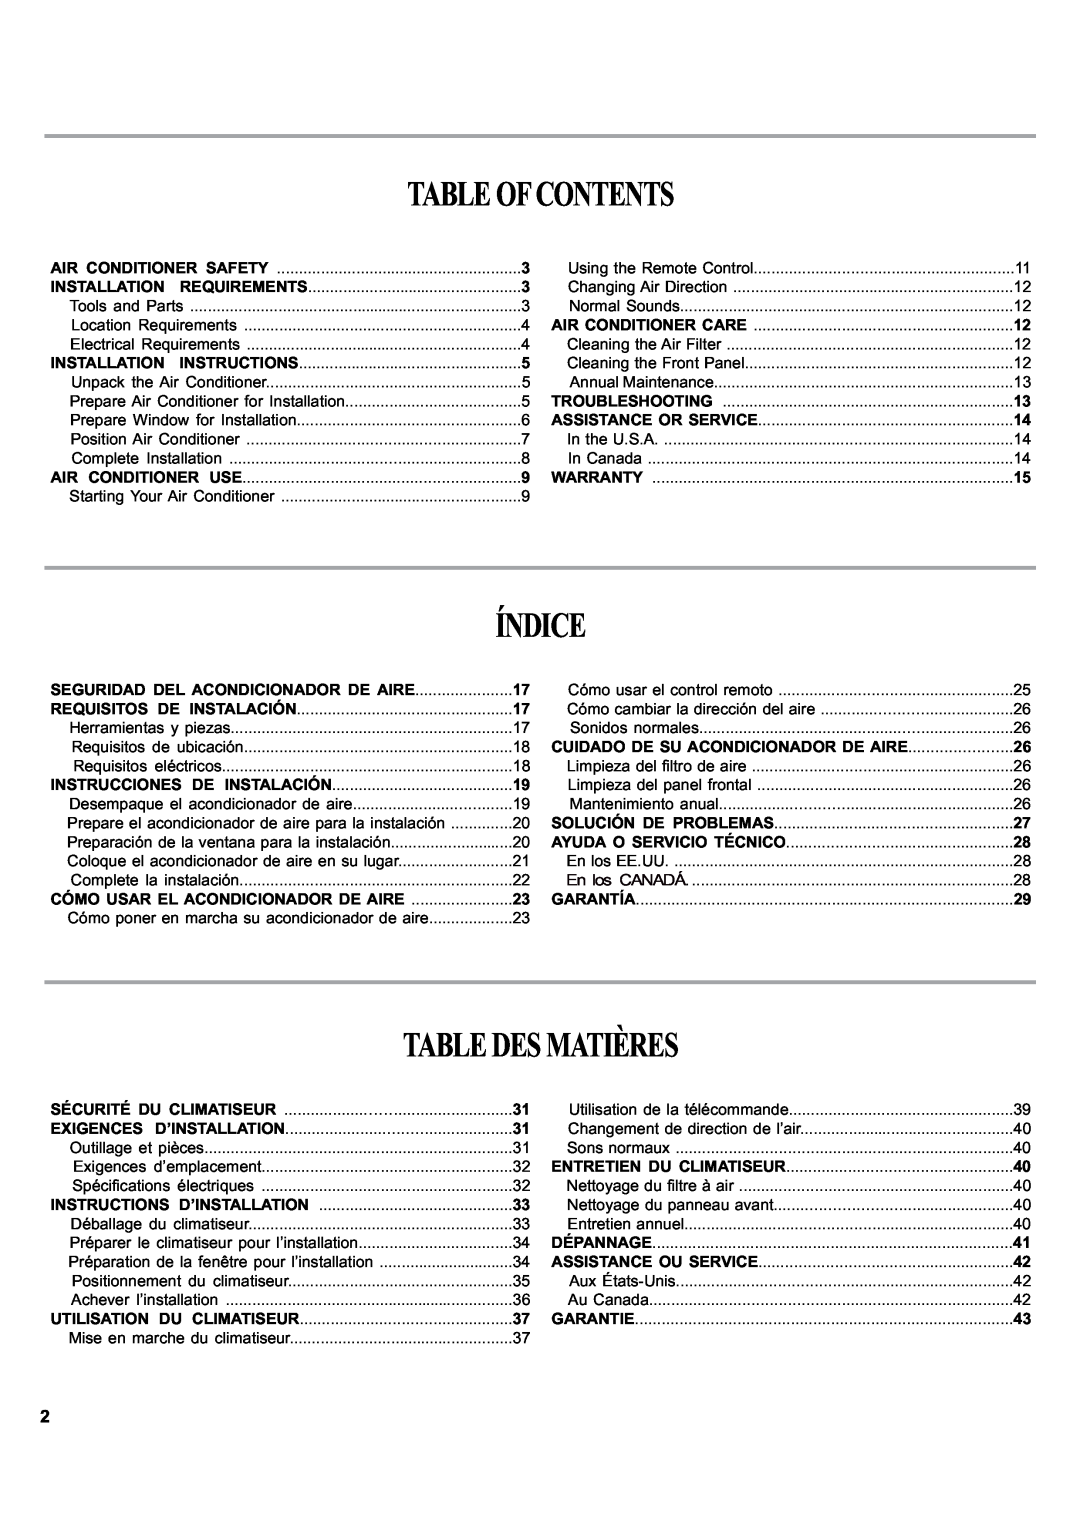 Haier ESA405K manual Tableofcontents, Índice, Tabledesmatières 